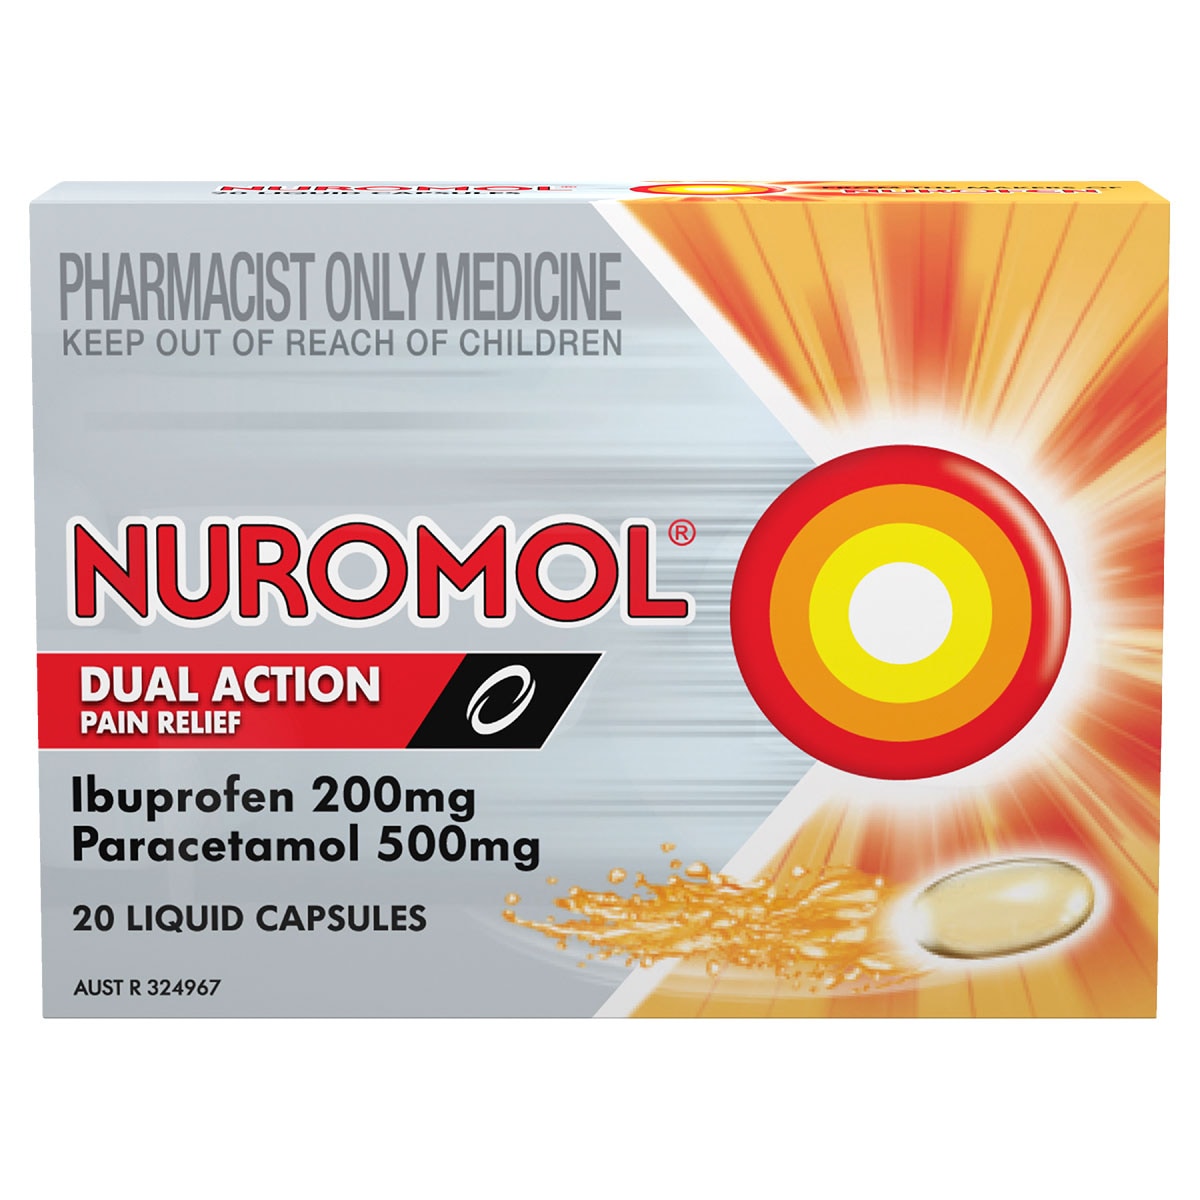 Nuromol Paracetamol (500mg) Ibuprofen (200mg) Dual Action Pain Relief 20 Liquid Capsules